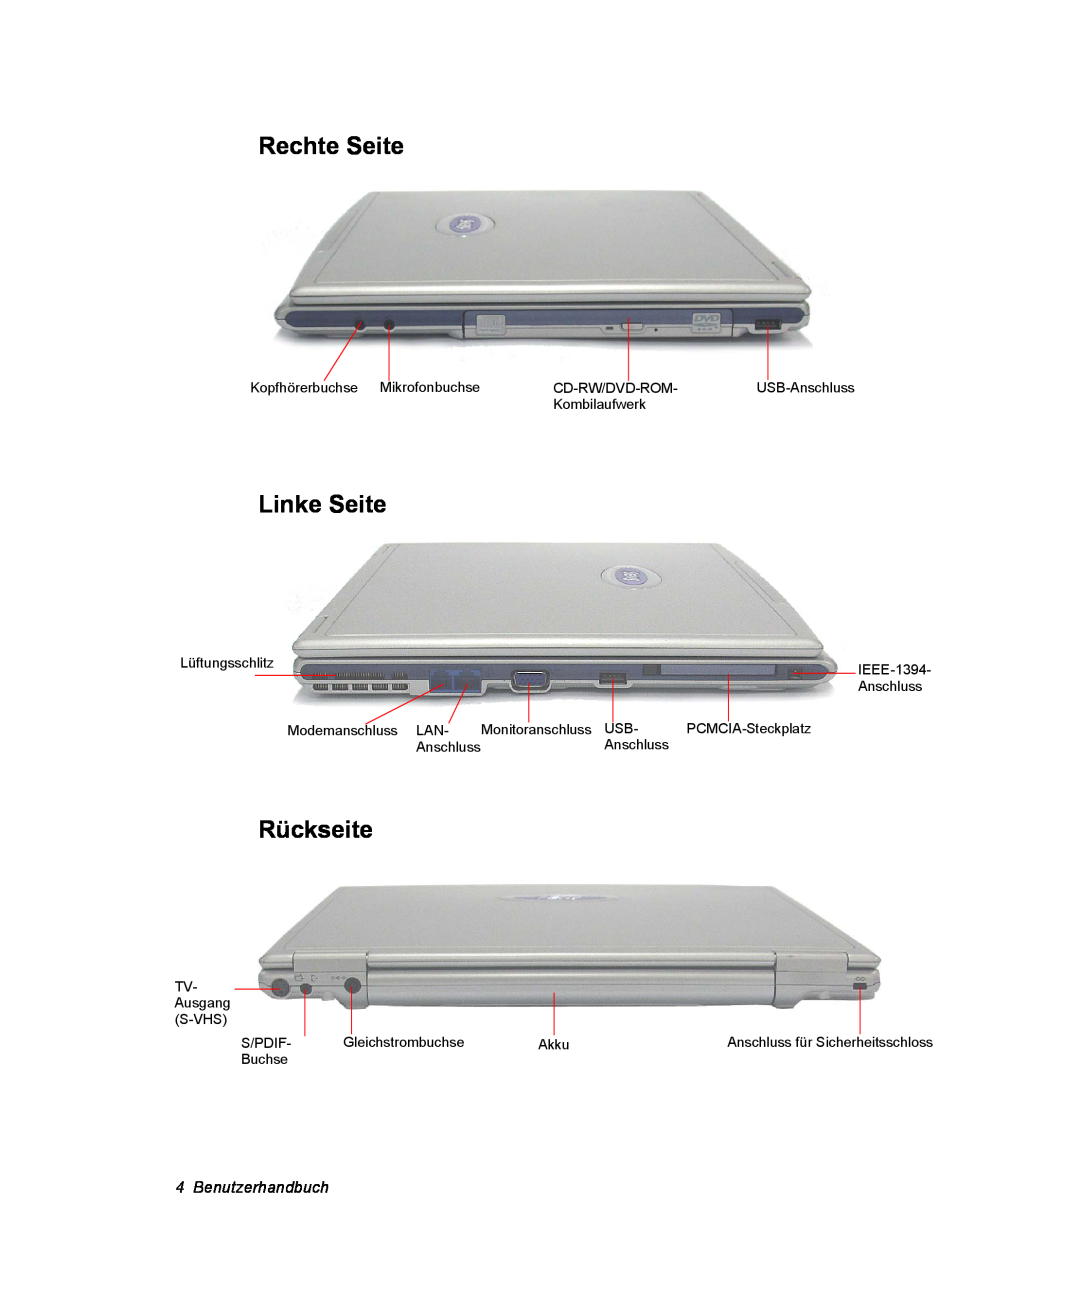 Samsung NX10-SEED/SEG, NX10PRDV01/SEG, NX10RK0HT5/SEG, NX10RH0653/SEK Rechte Seite, Linke Seite, Rückseite, Benutzerhandbuch 